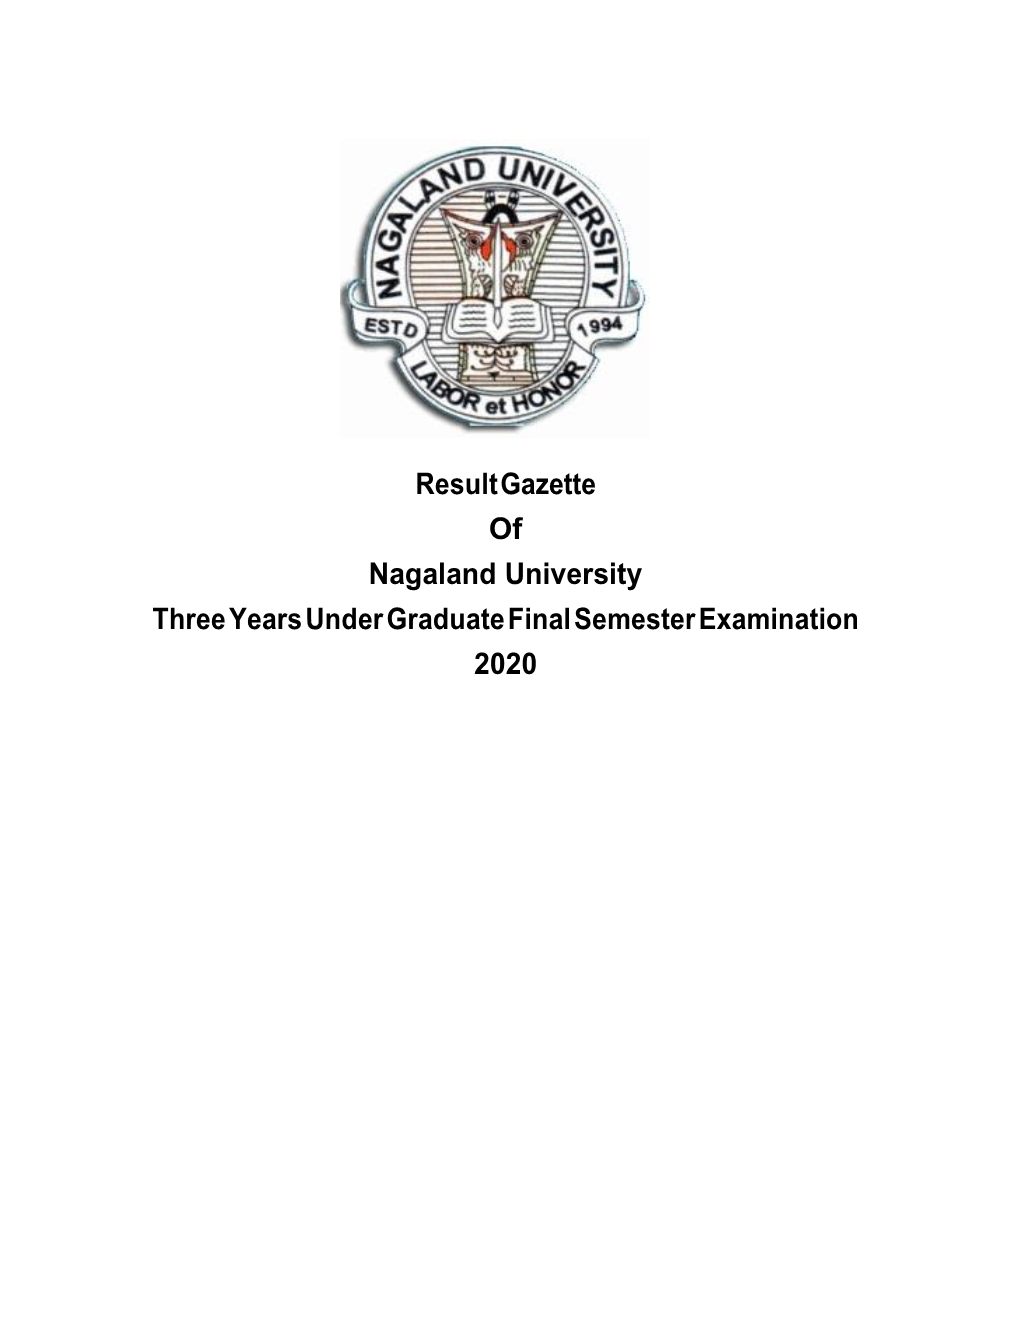 Result Gazette of Nagaland University Three Years Under Graduate Final Semester Examination 2020